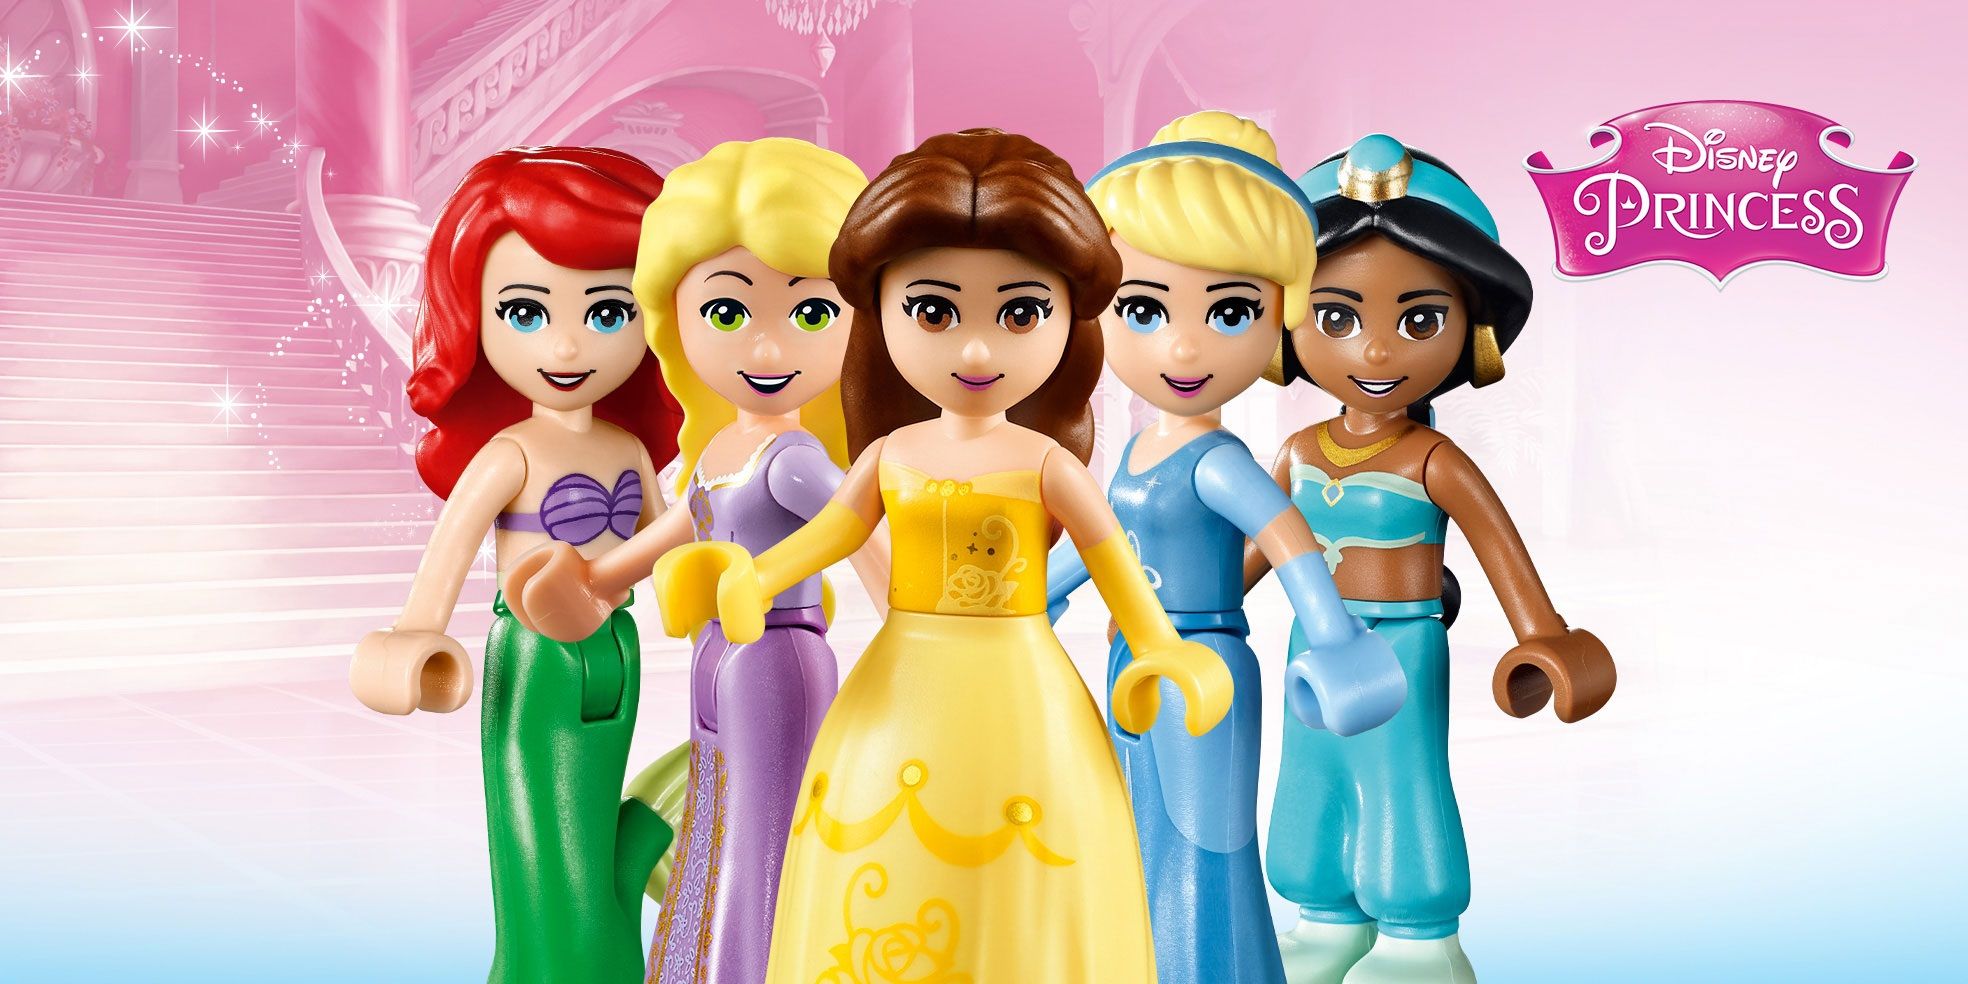 The Lego Disney Princess crew